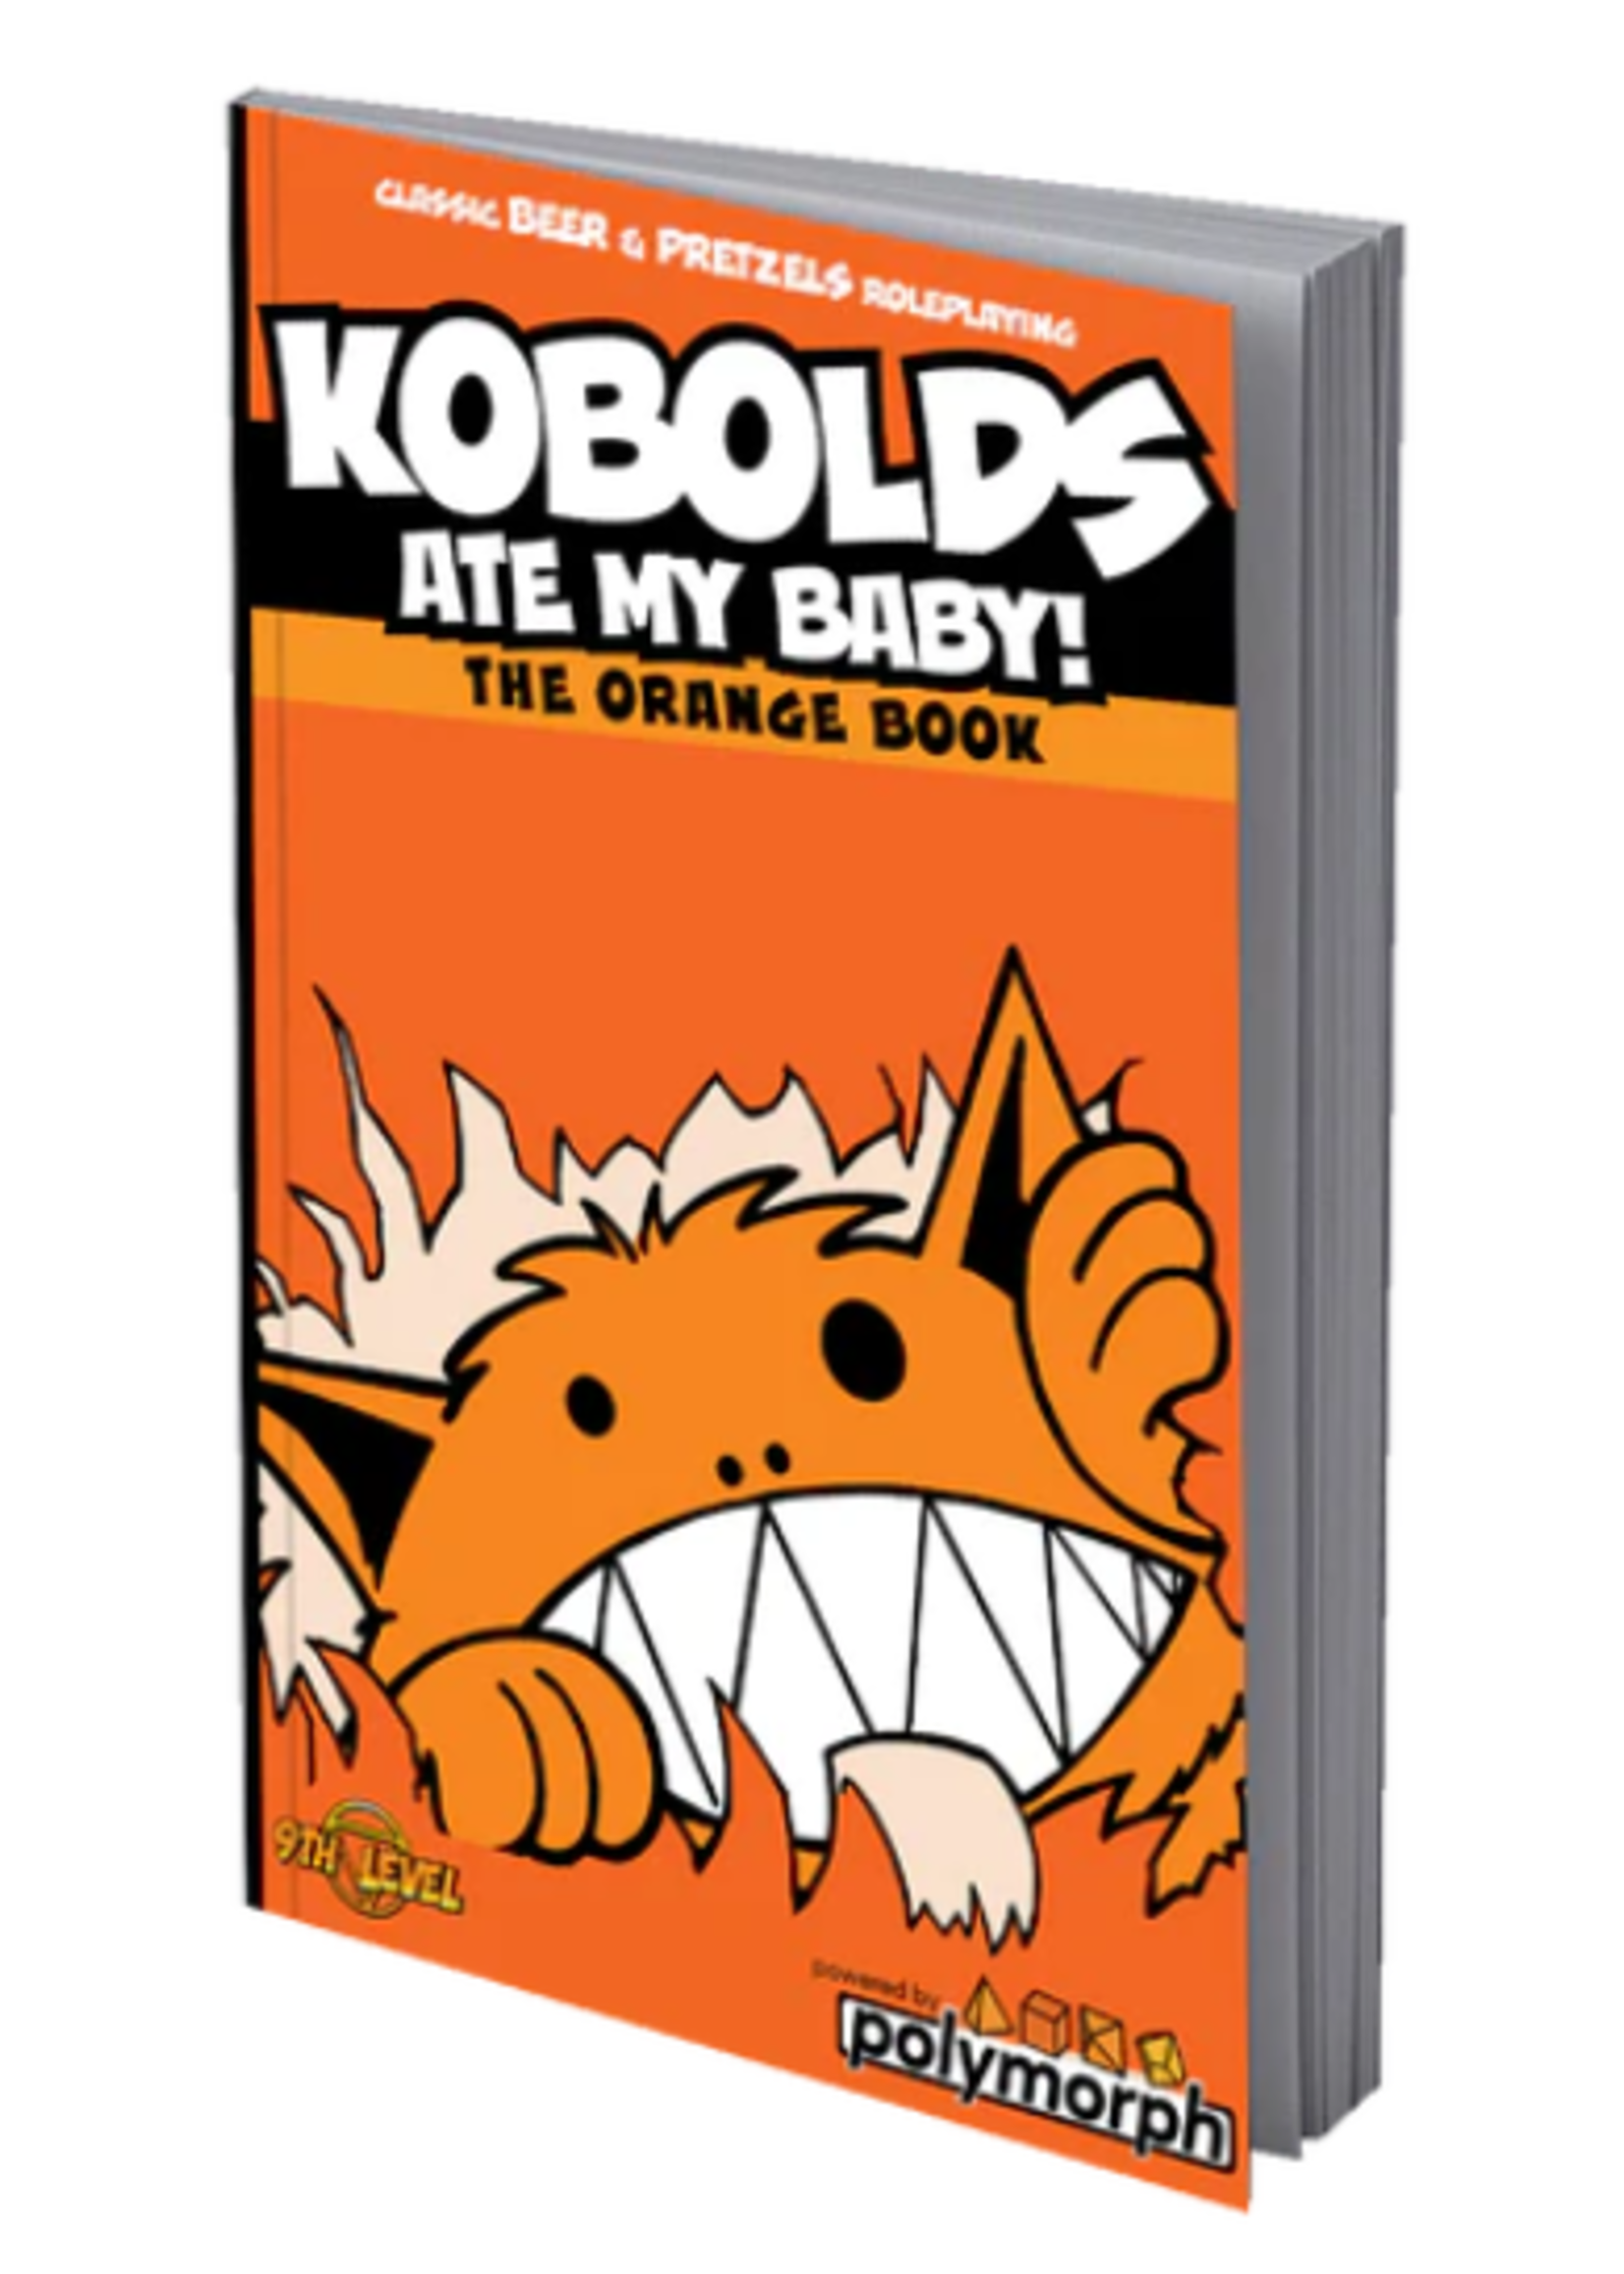 9th Level Games Kobolds Ate My Baby: The Orange Book (Beer & Pretzels RPG)